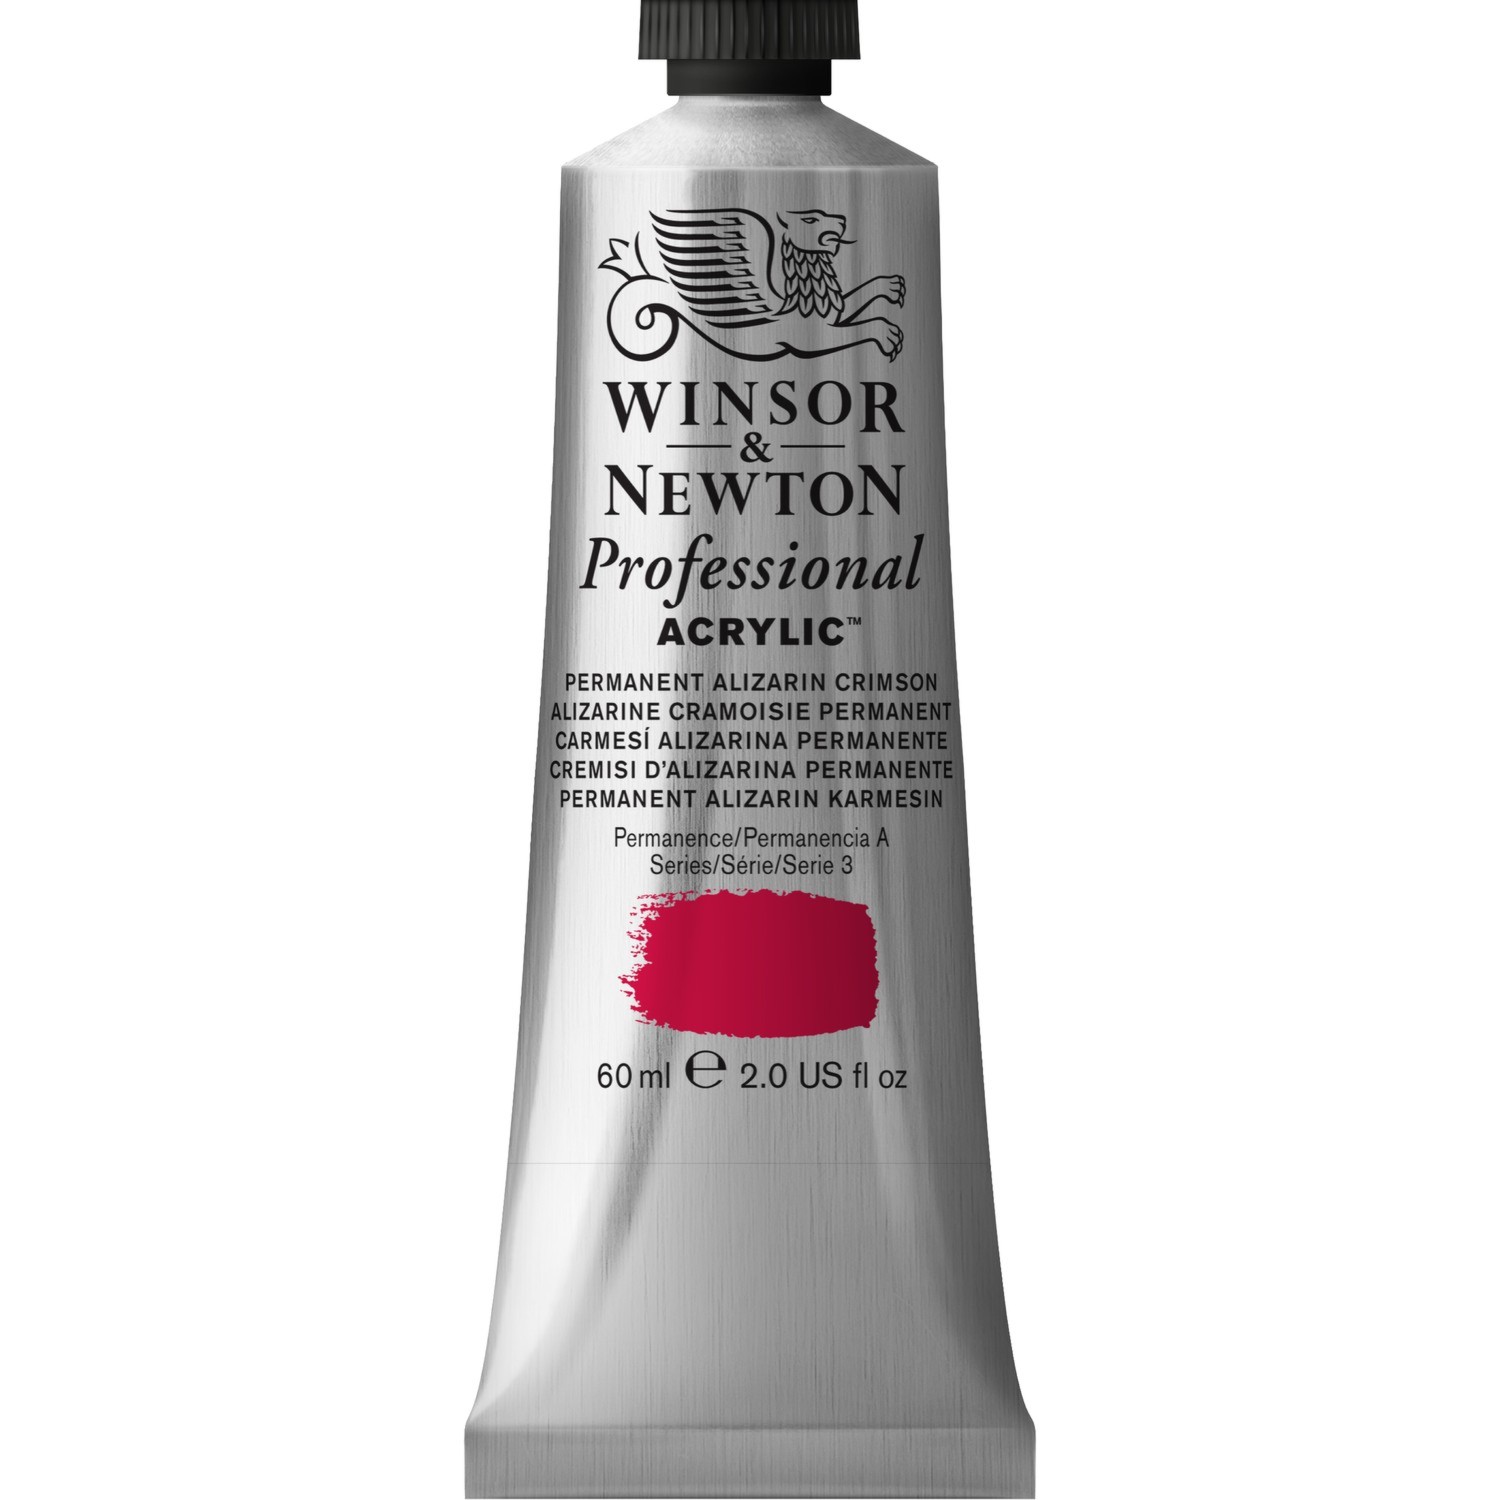 Winsor and Newton 60ml Professional Acrylic Paint - Alizarin Crimson Image 1